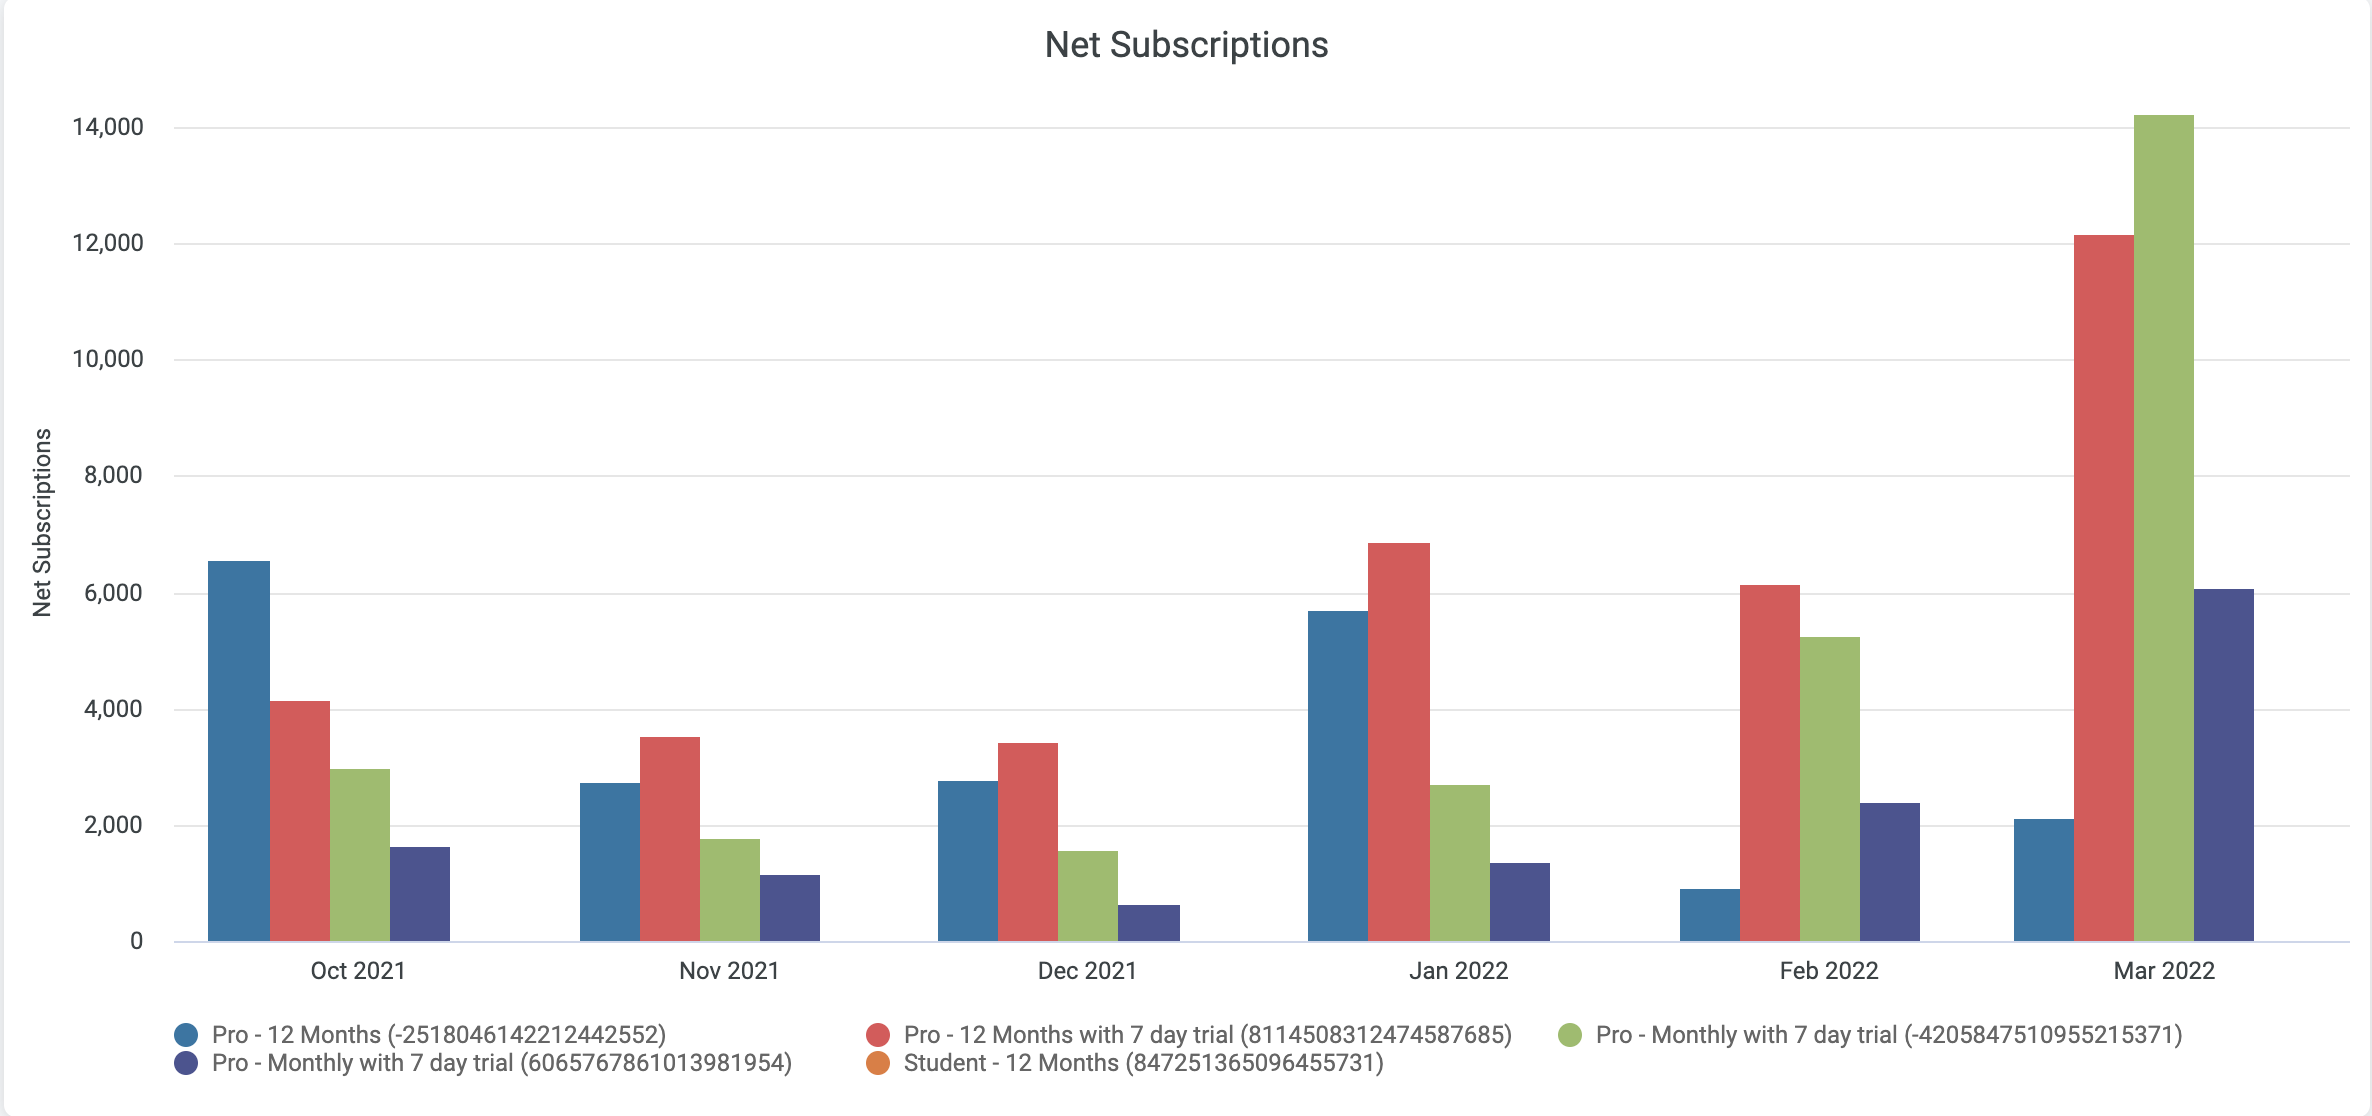 Plan Performance Net Subscriptions